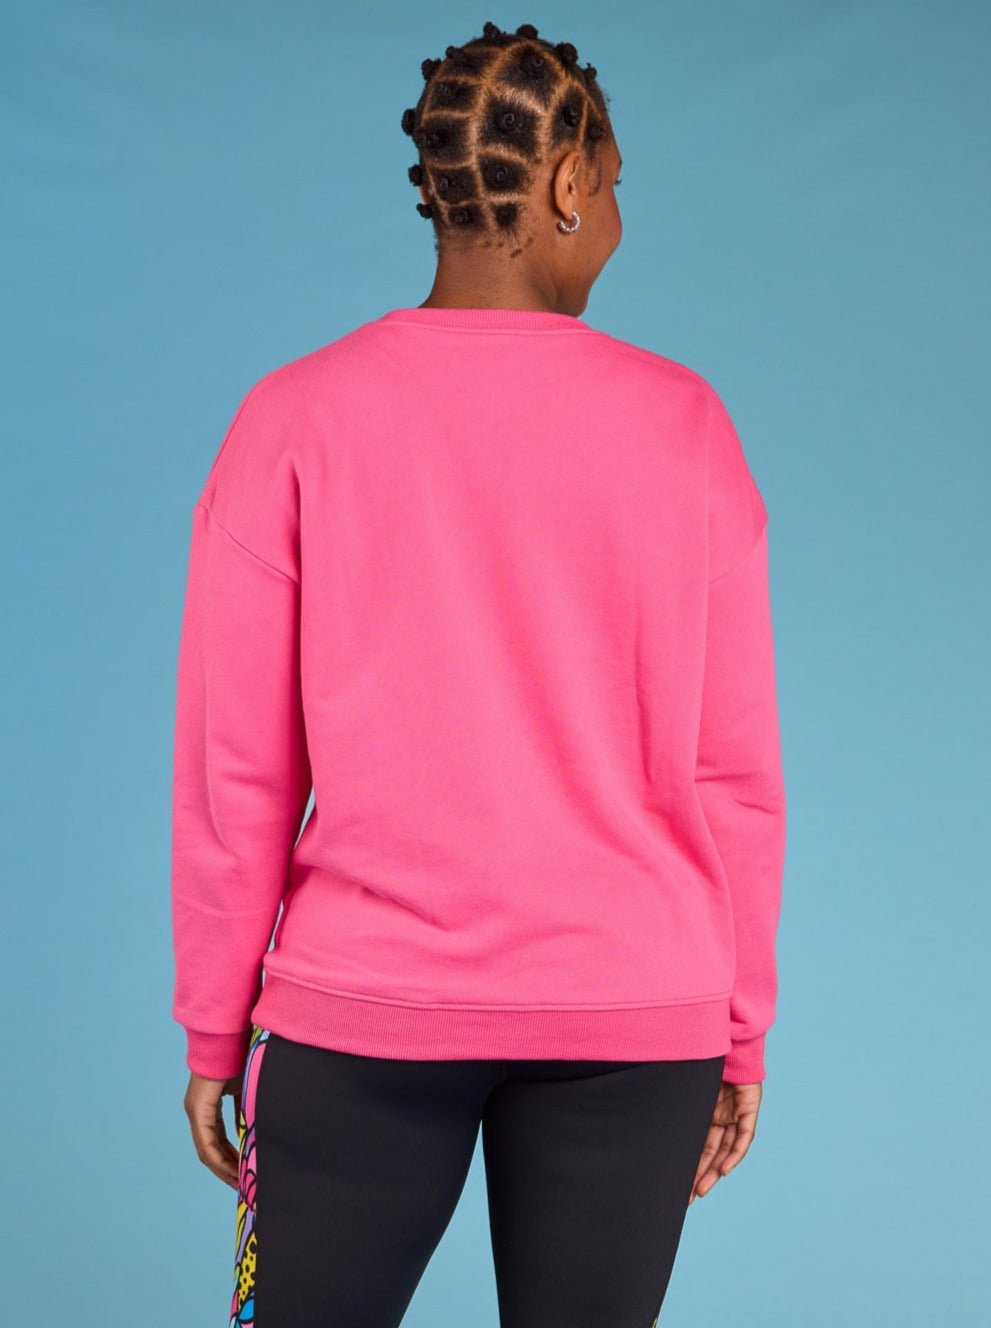 Rainbow at Heart Organic Cotton Sweatshirt - Dolly Pink - pink organic cotton sweatshirt relaxed fit